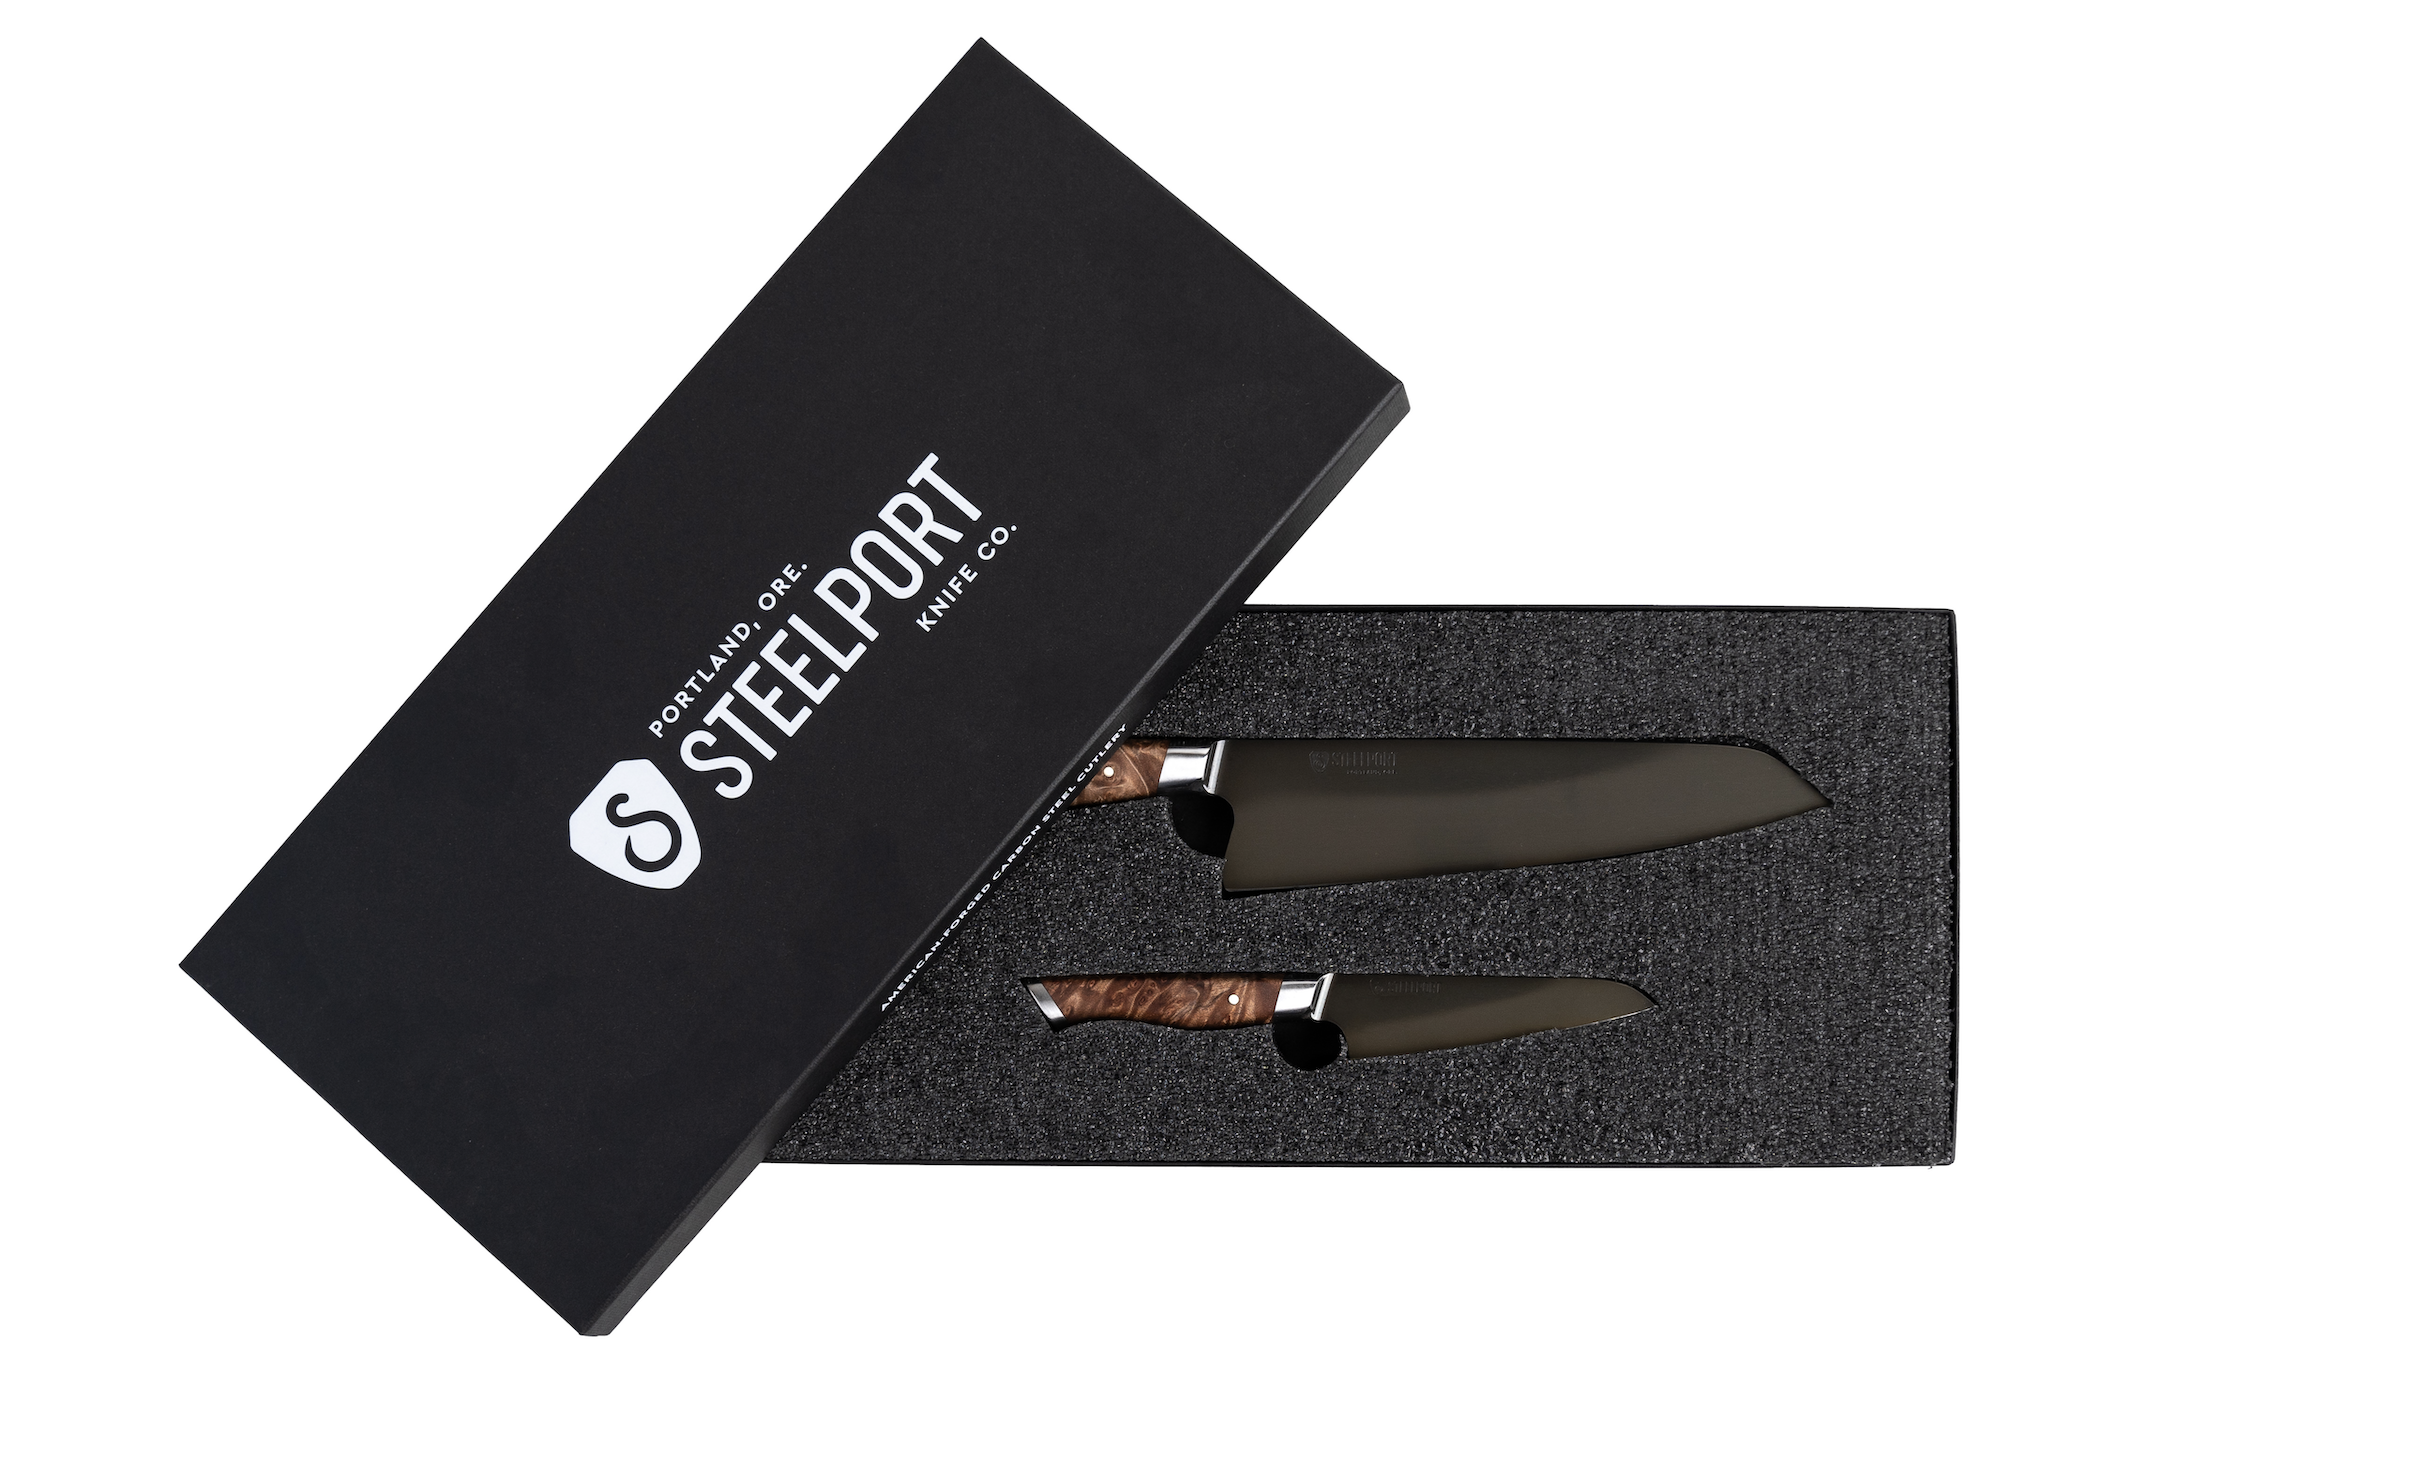 Steelport 3-Piece Knife Set